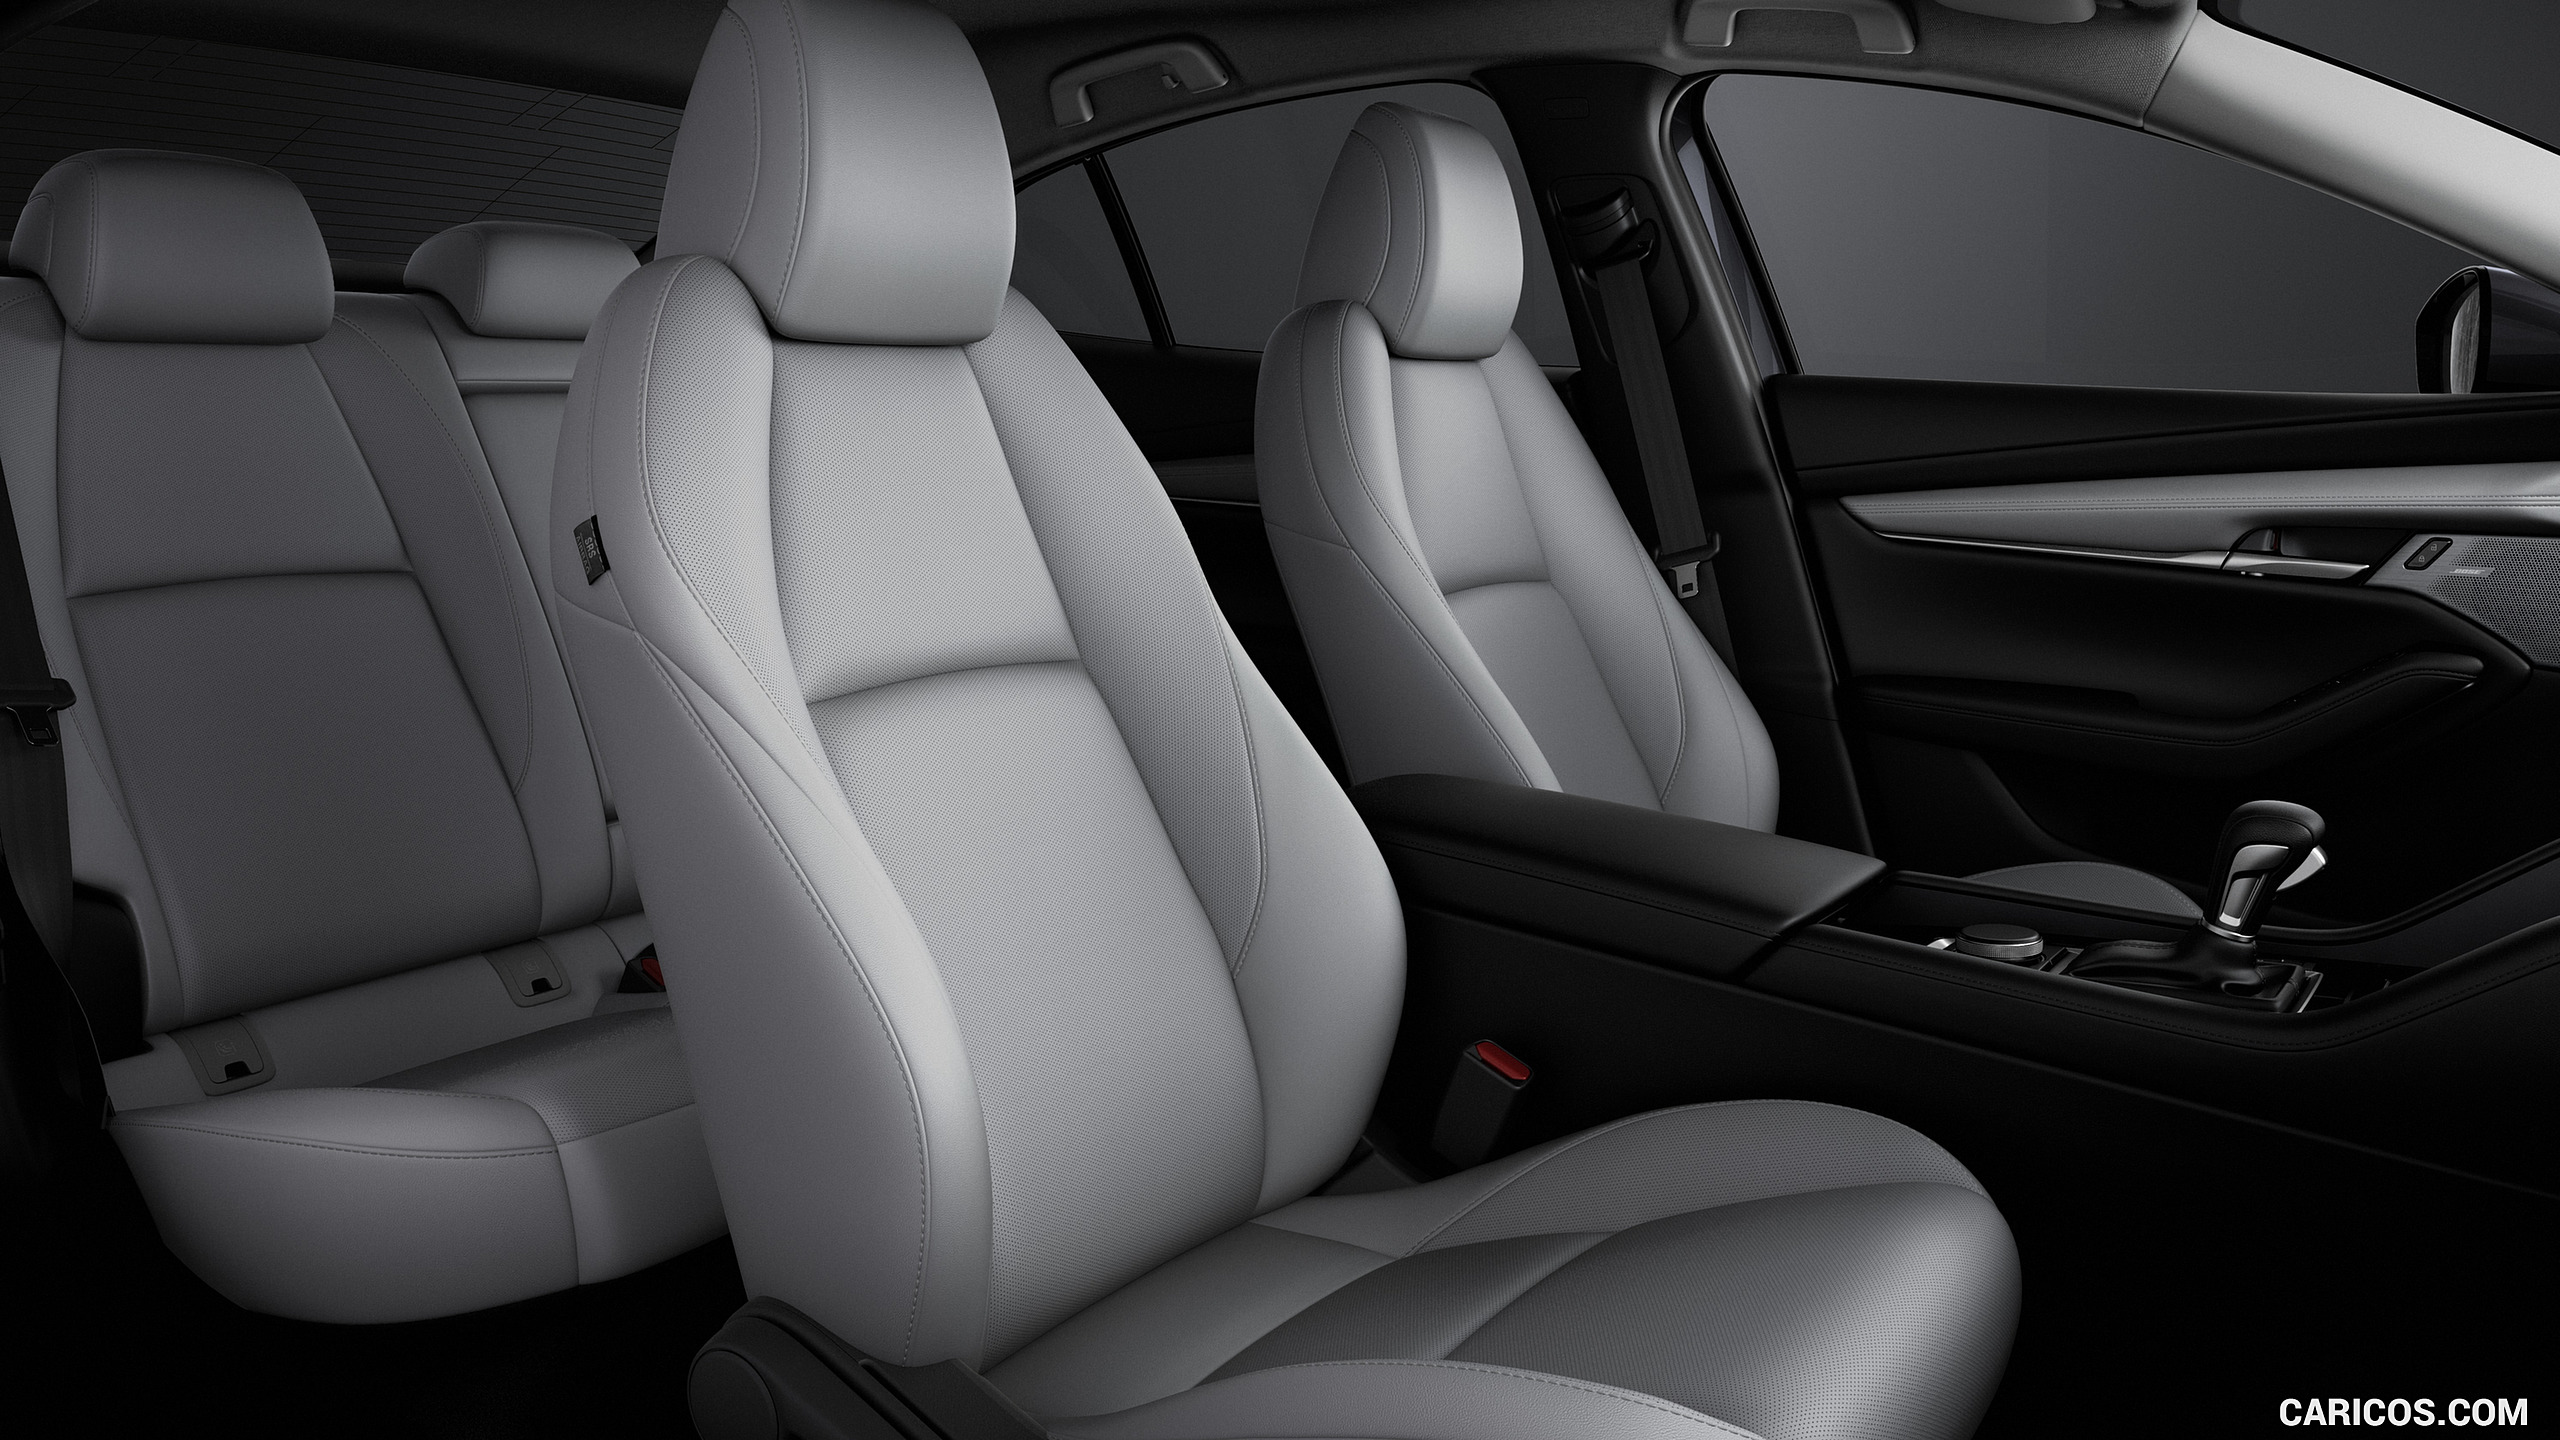 2019 Mazda3 Interior Seats Hd Wallpaper 23